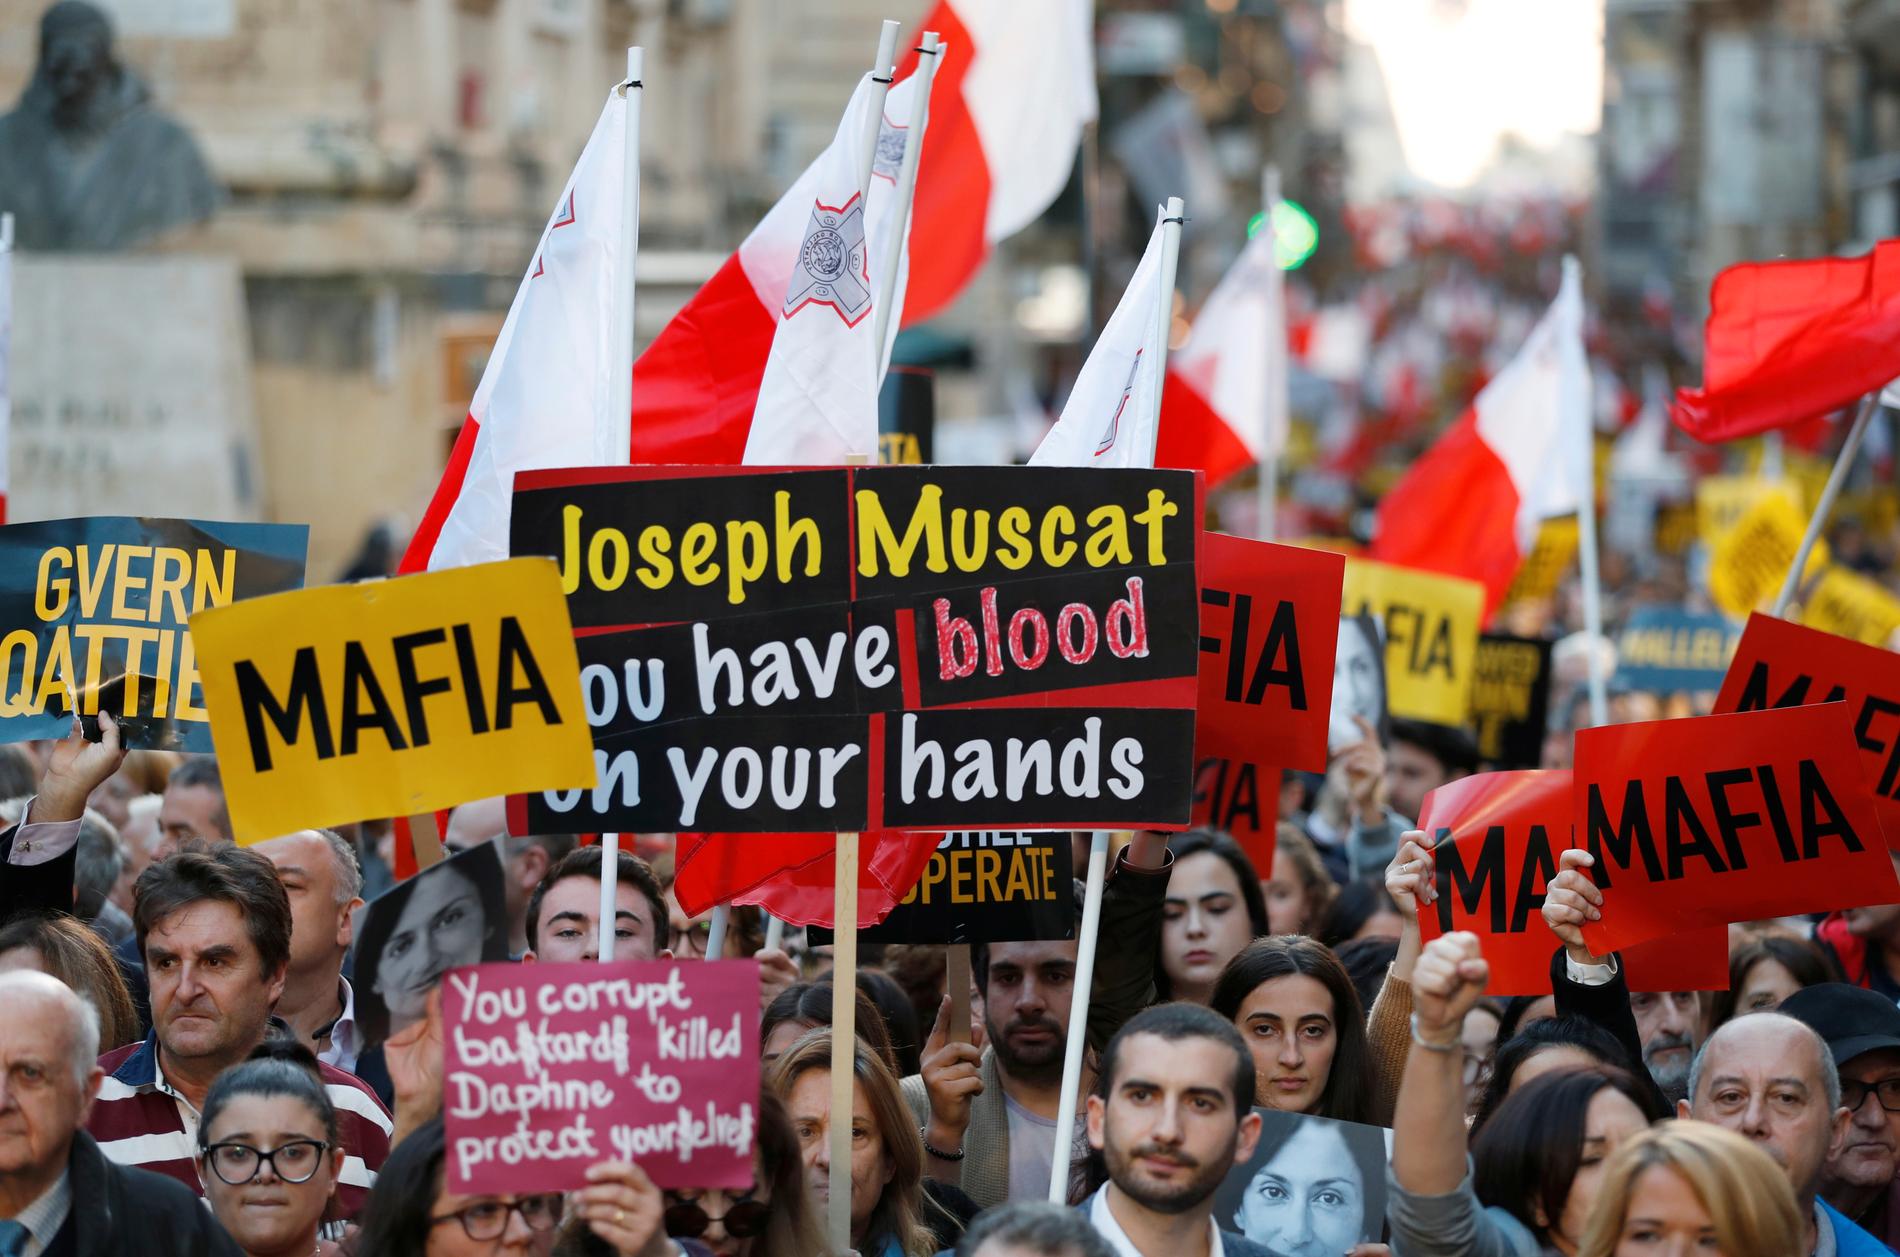 "Joseph Muscat, du har blod på dina händer", lyder ett av plakaten. "Maffia", lyder ett annat.